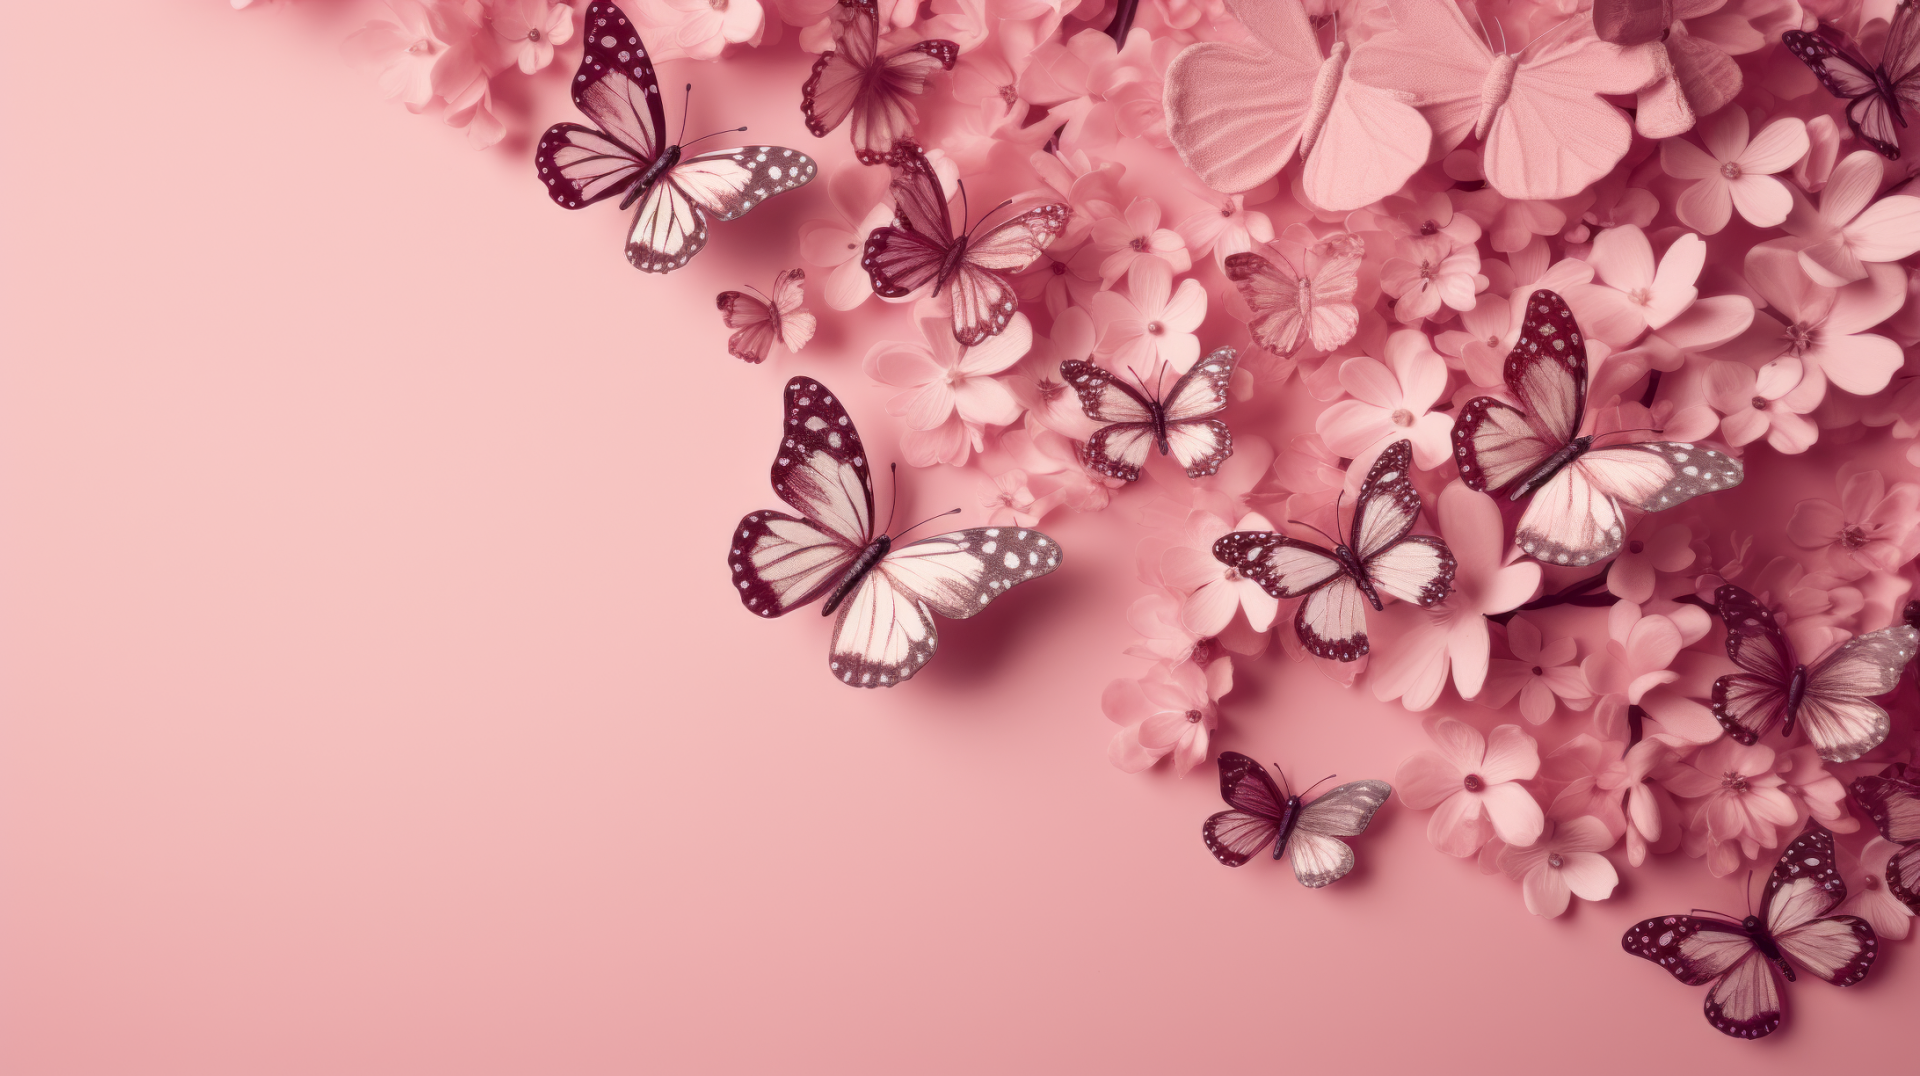 Desktop Aesthetic Cool Pink Setup Wallpaper, HD Artist 4K Wallpapers,  Images and Background - Wallpapers Den